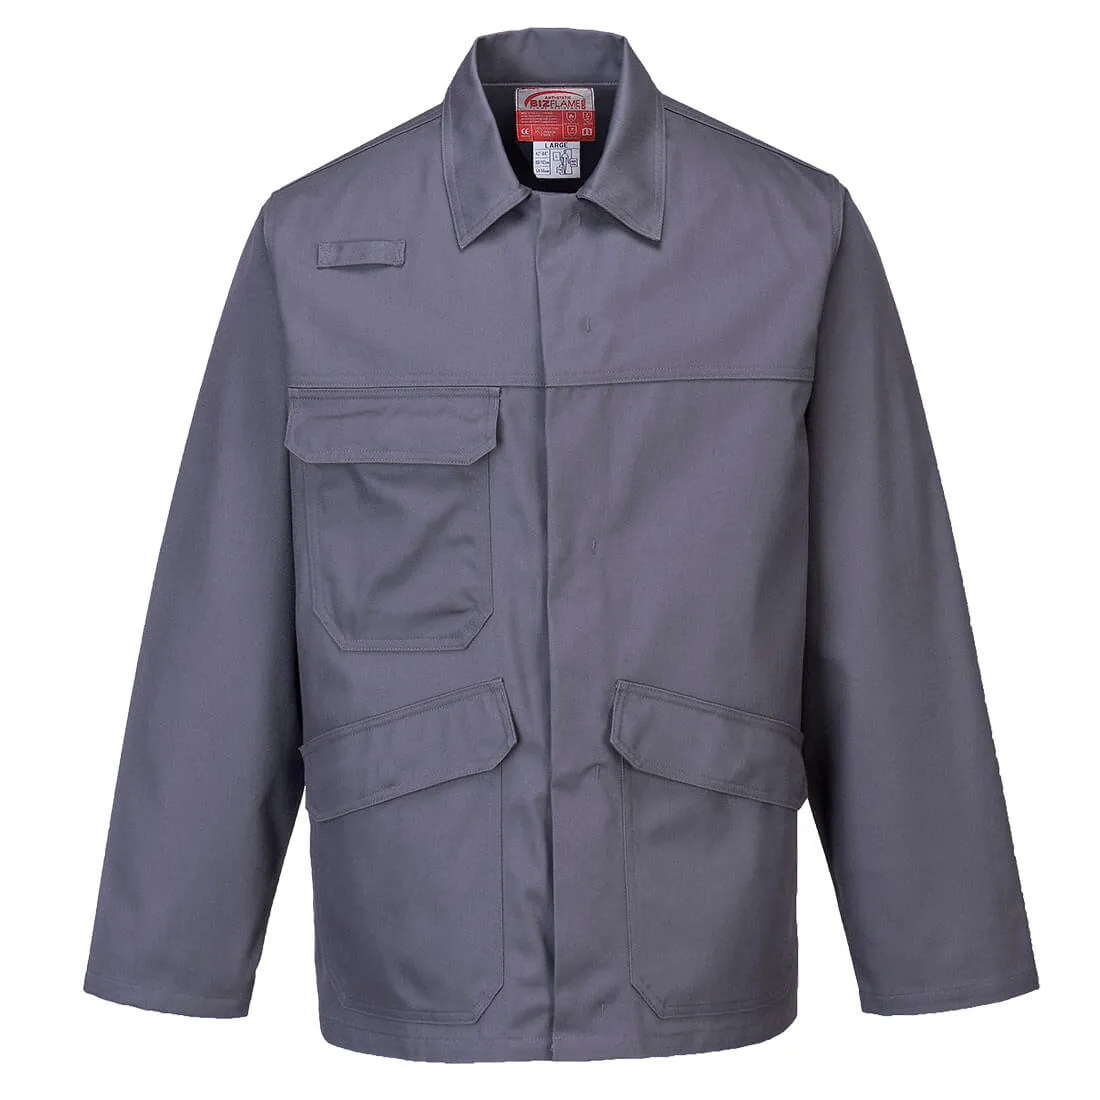 Biz Flame Pro Mens Flame Resistant Jacket - Grey, L